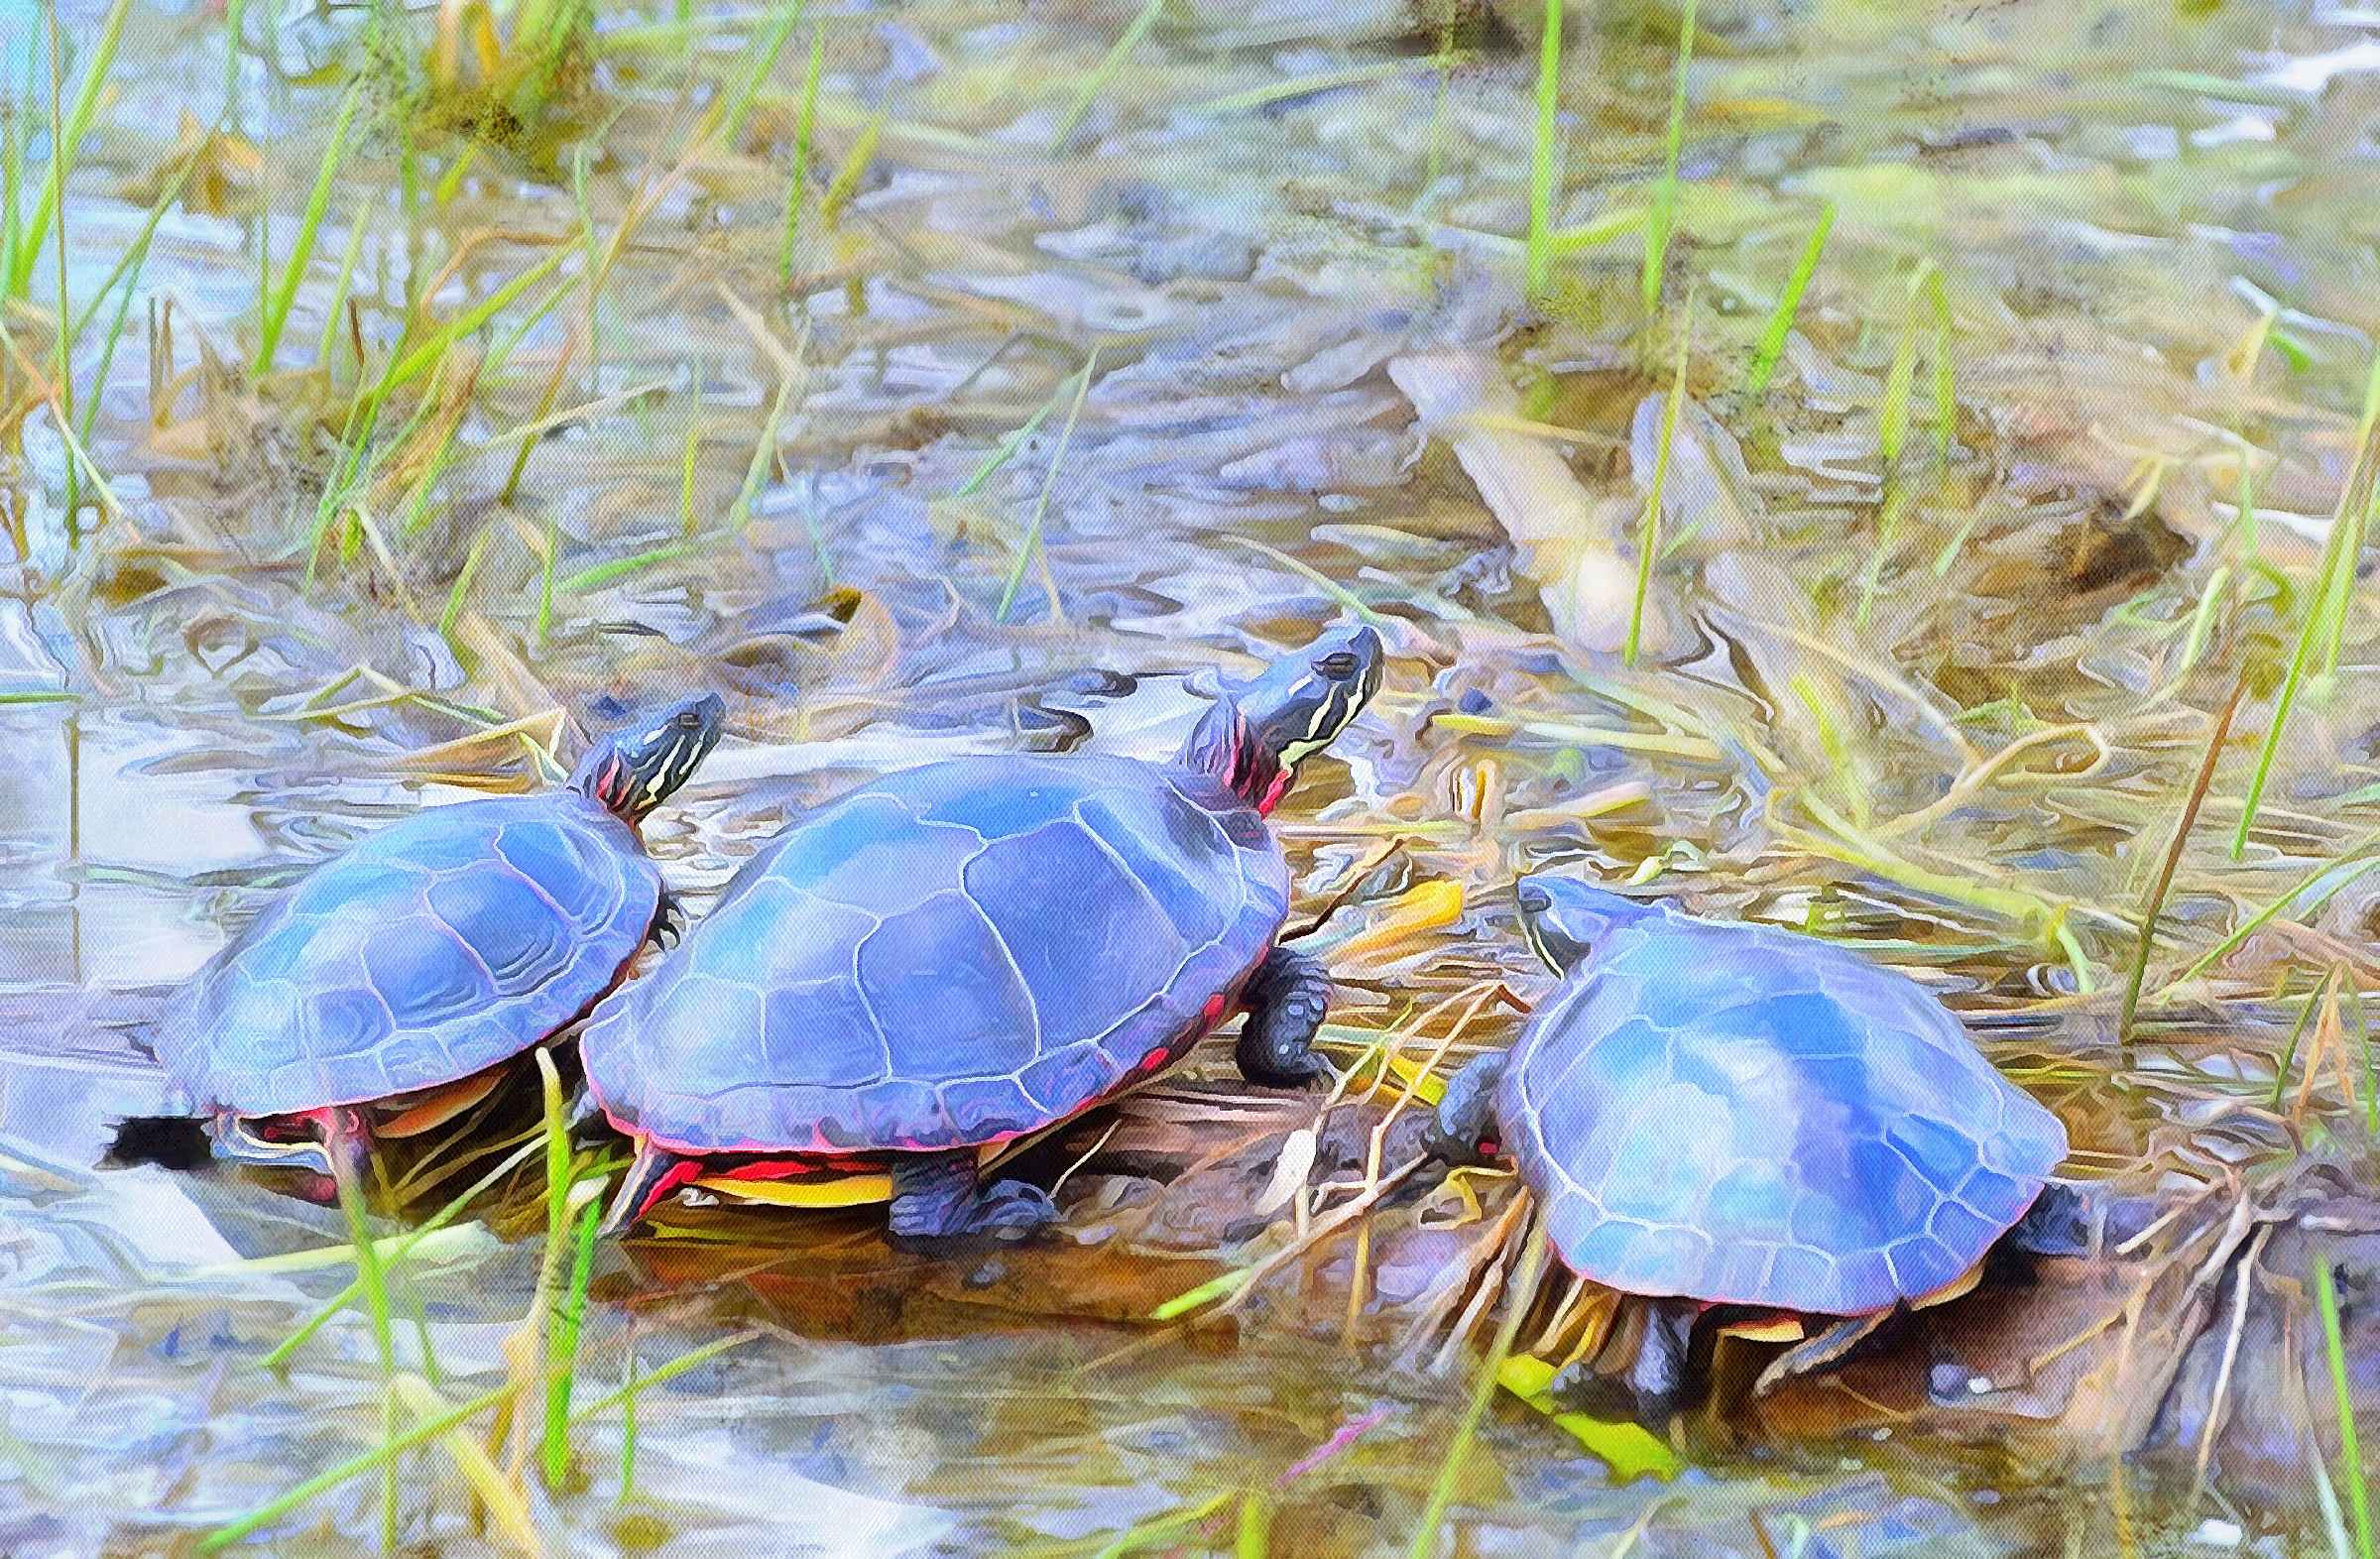 Turtle free images, Free Tortoise images, – free images turtles, tortoise public domain images, Turtle public domain images, Tortoise free!